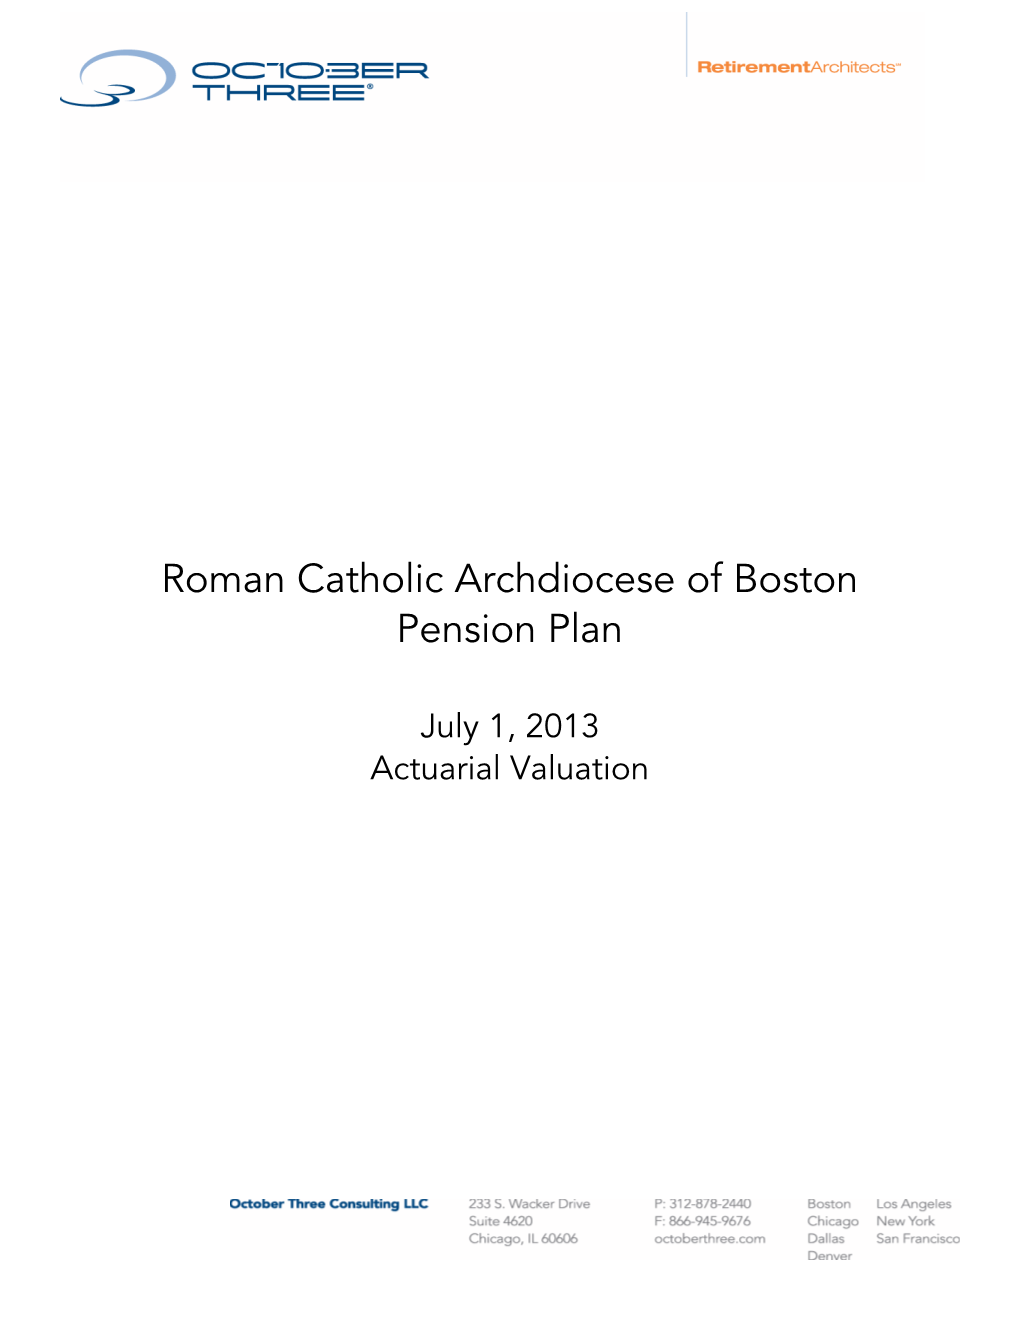 Roman Catholic Archdiocese of Boston Pension Plan